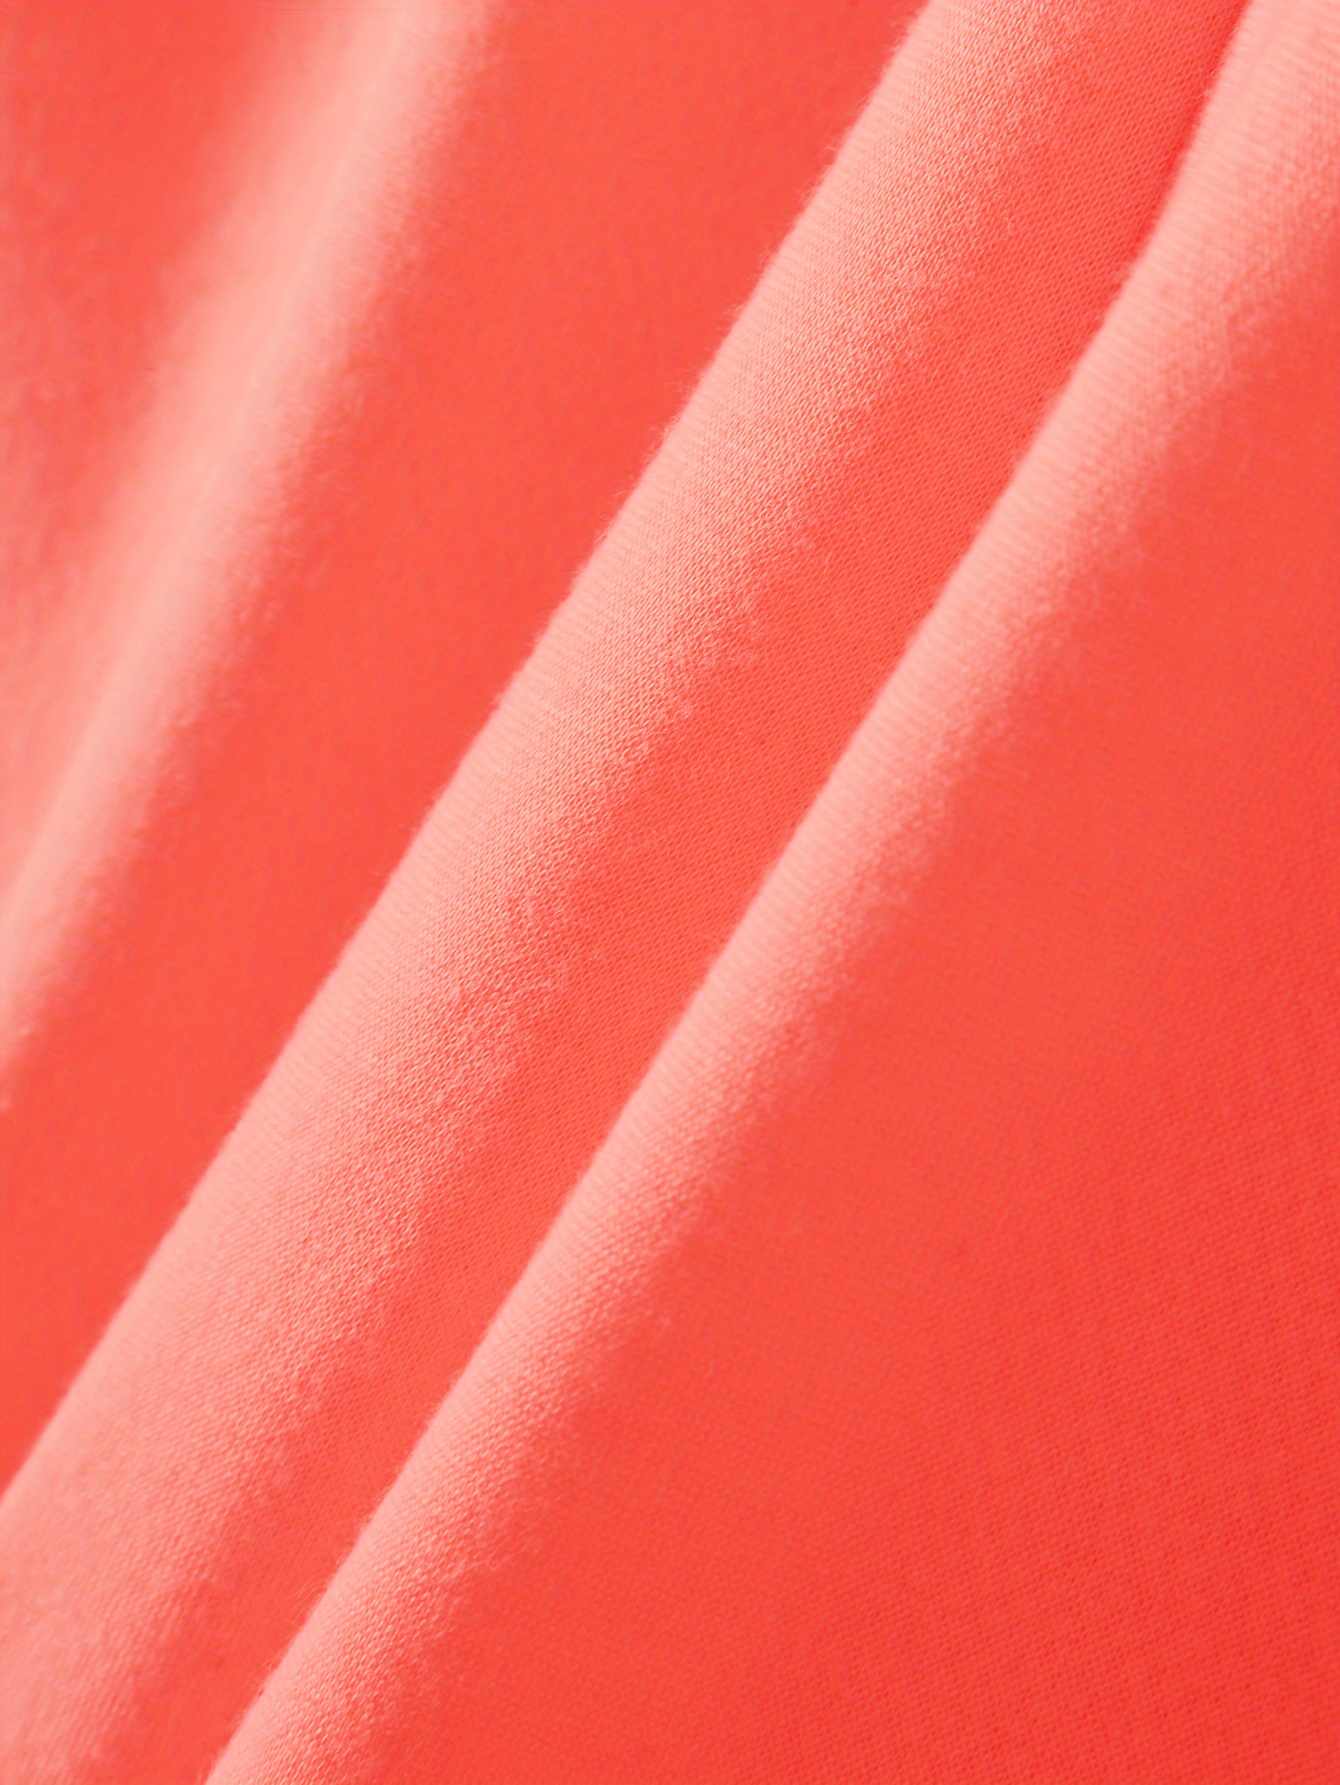 solid drawstring thermal sweatpants versatile loose comfy jogger pants womens clothing details 43